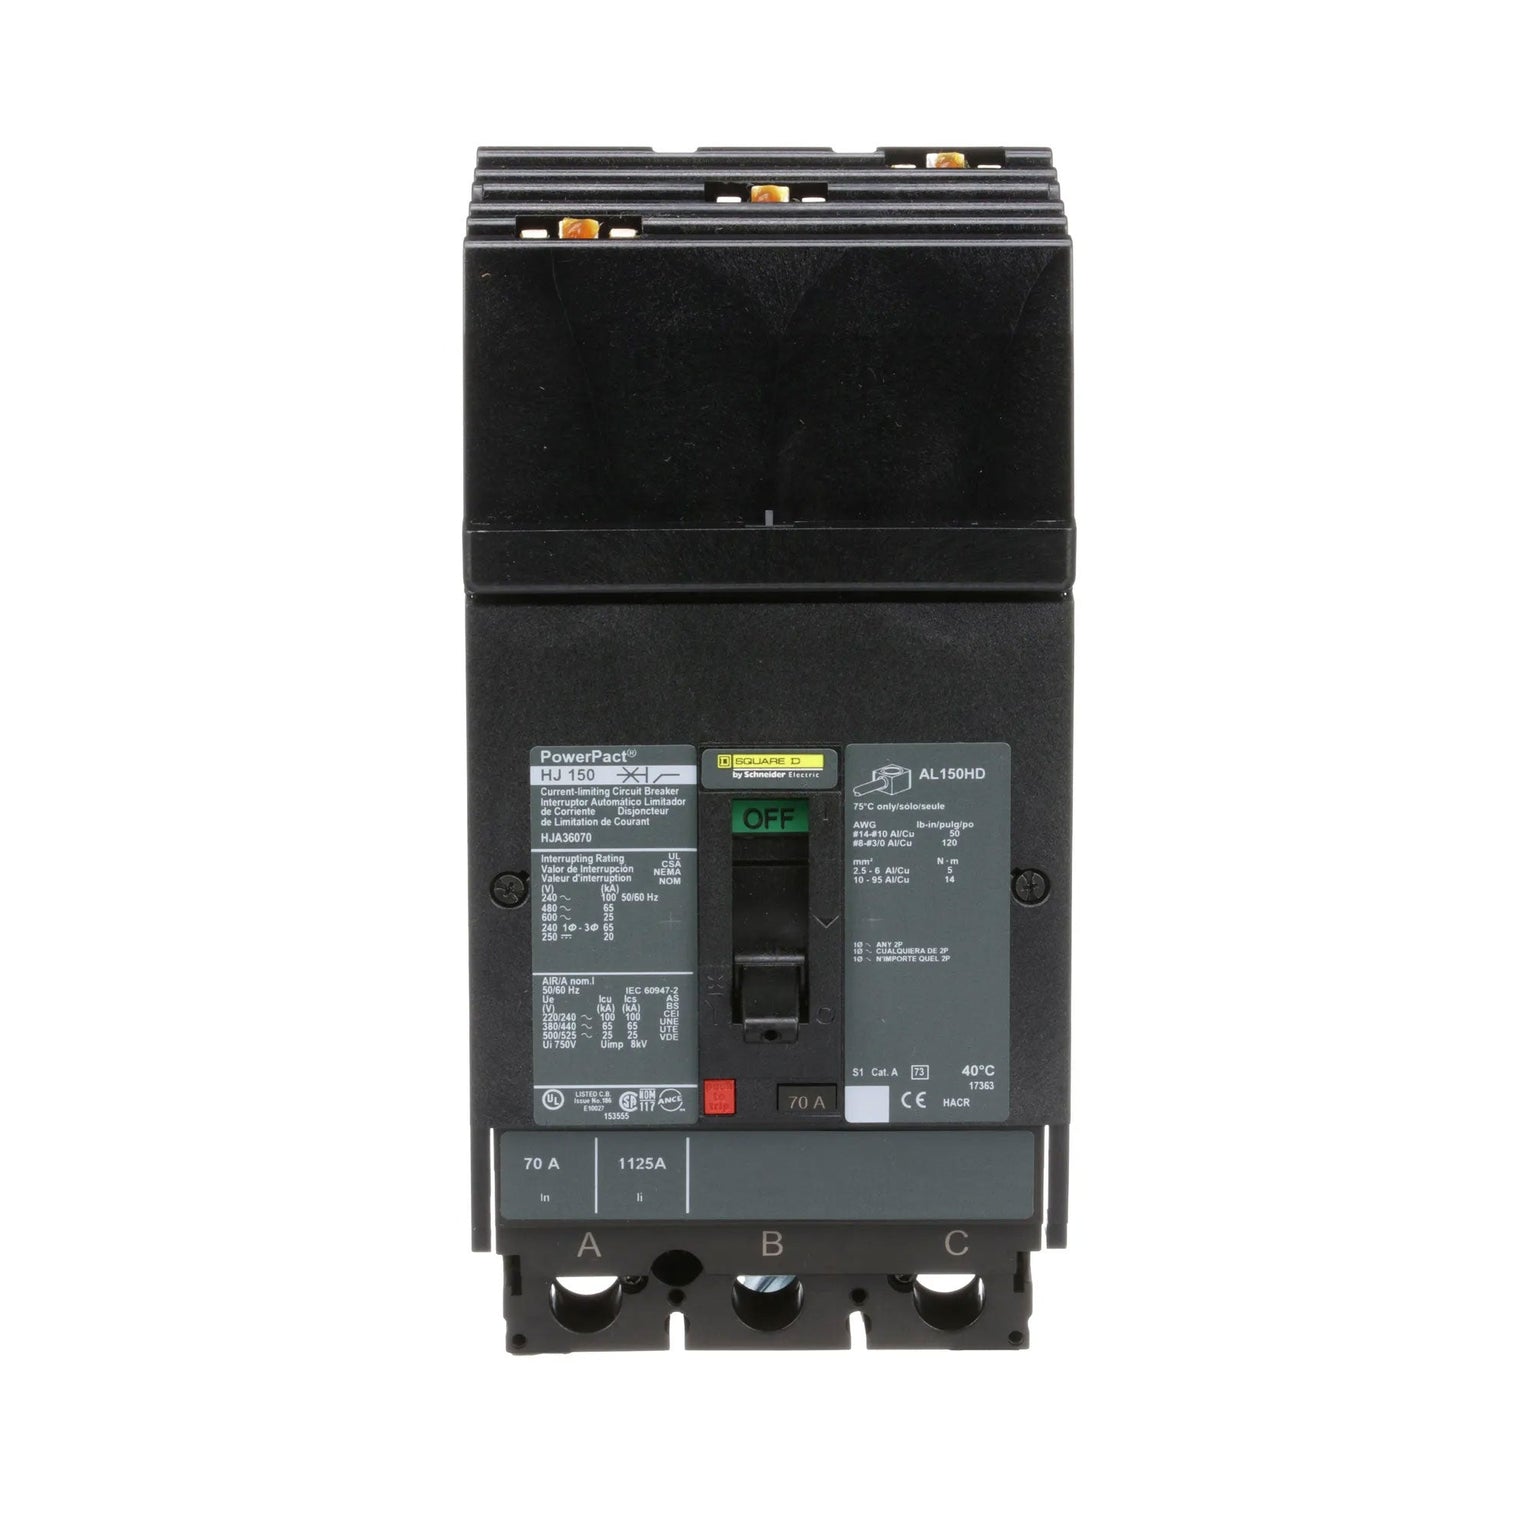 HJA36070 - Square D 70 Amp 3 Pole 600 Volt Molded Case Circuit Breaker